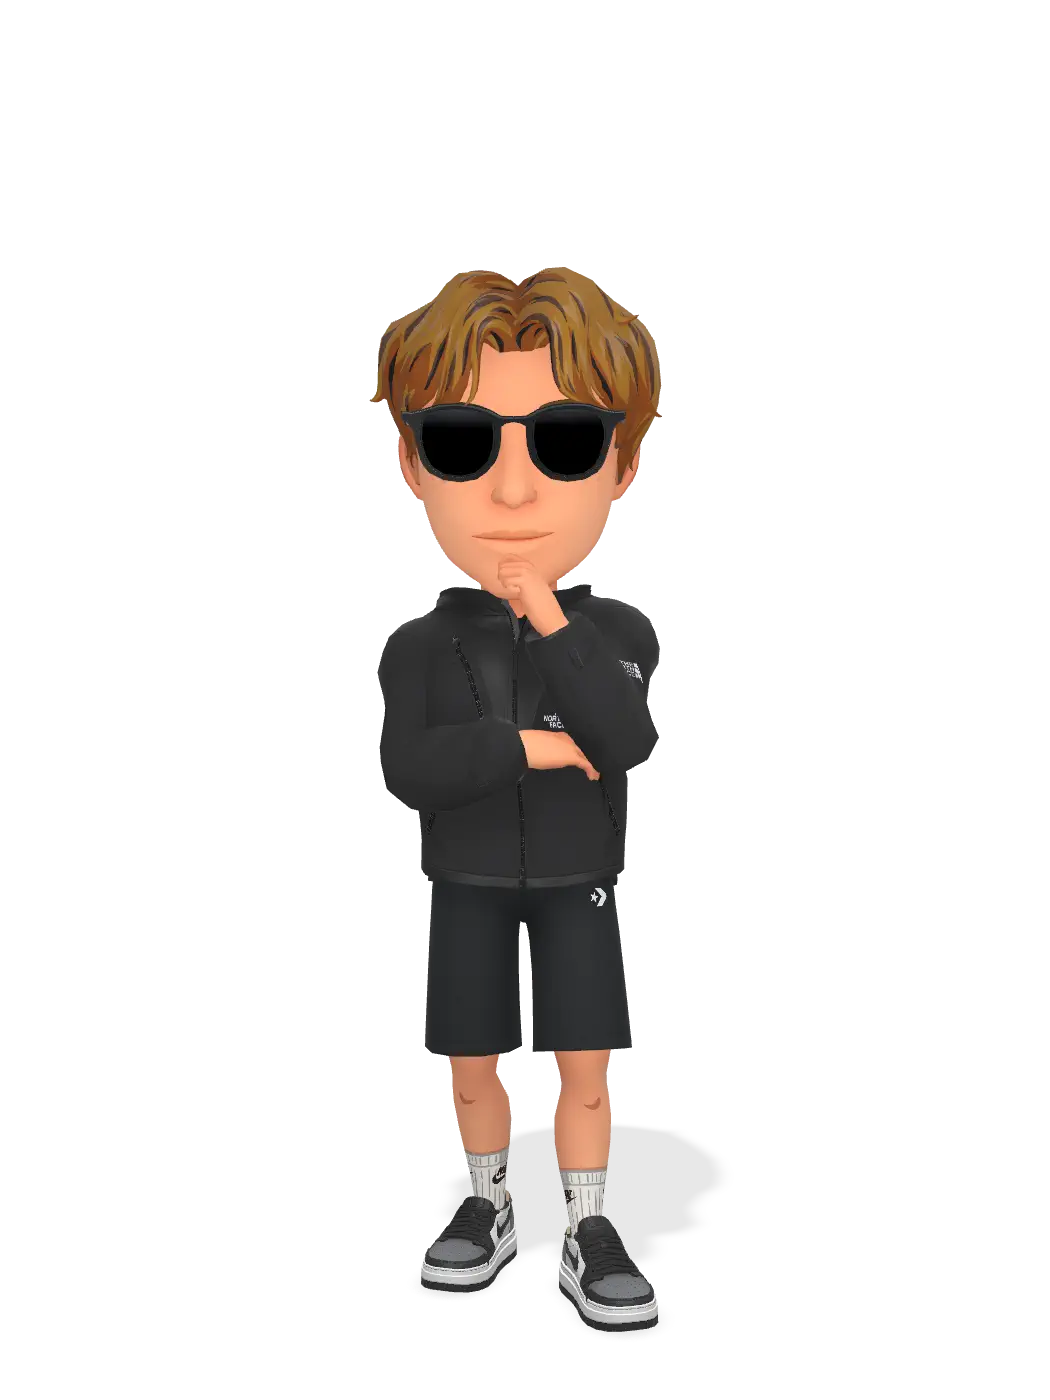 3D Bitmoji for tylerw3878 avatar